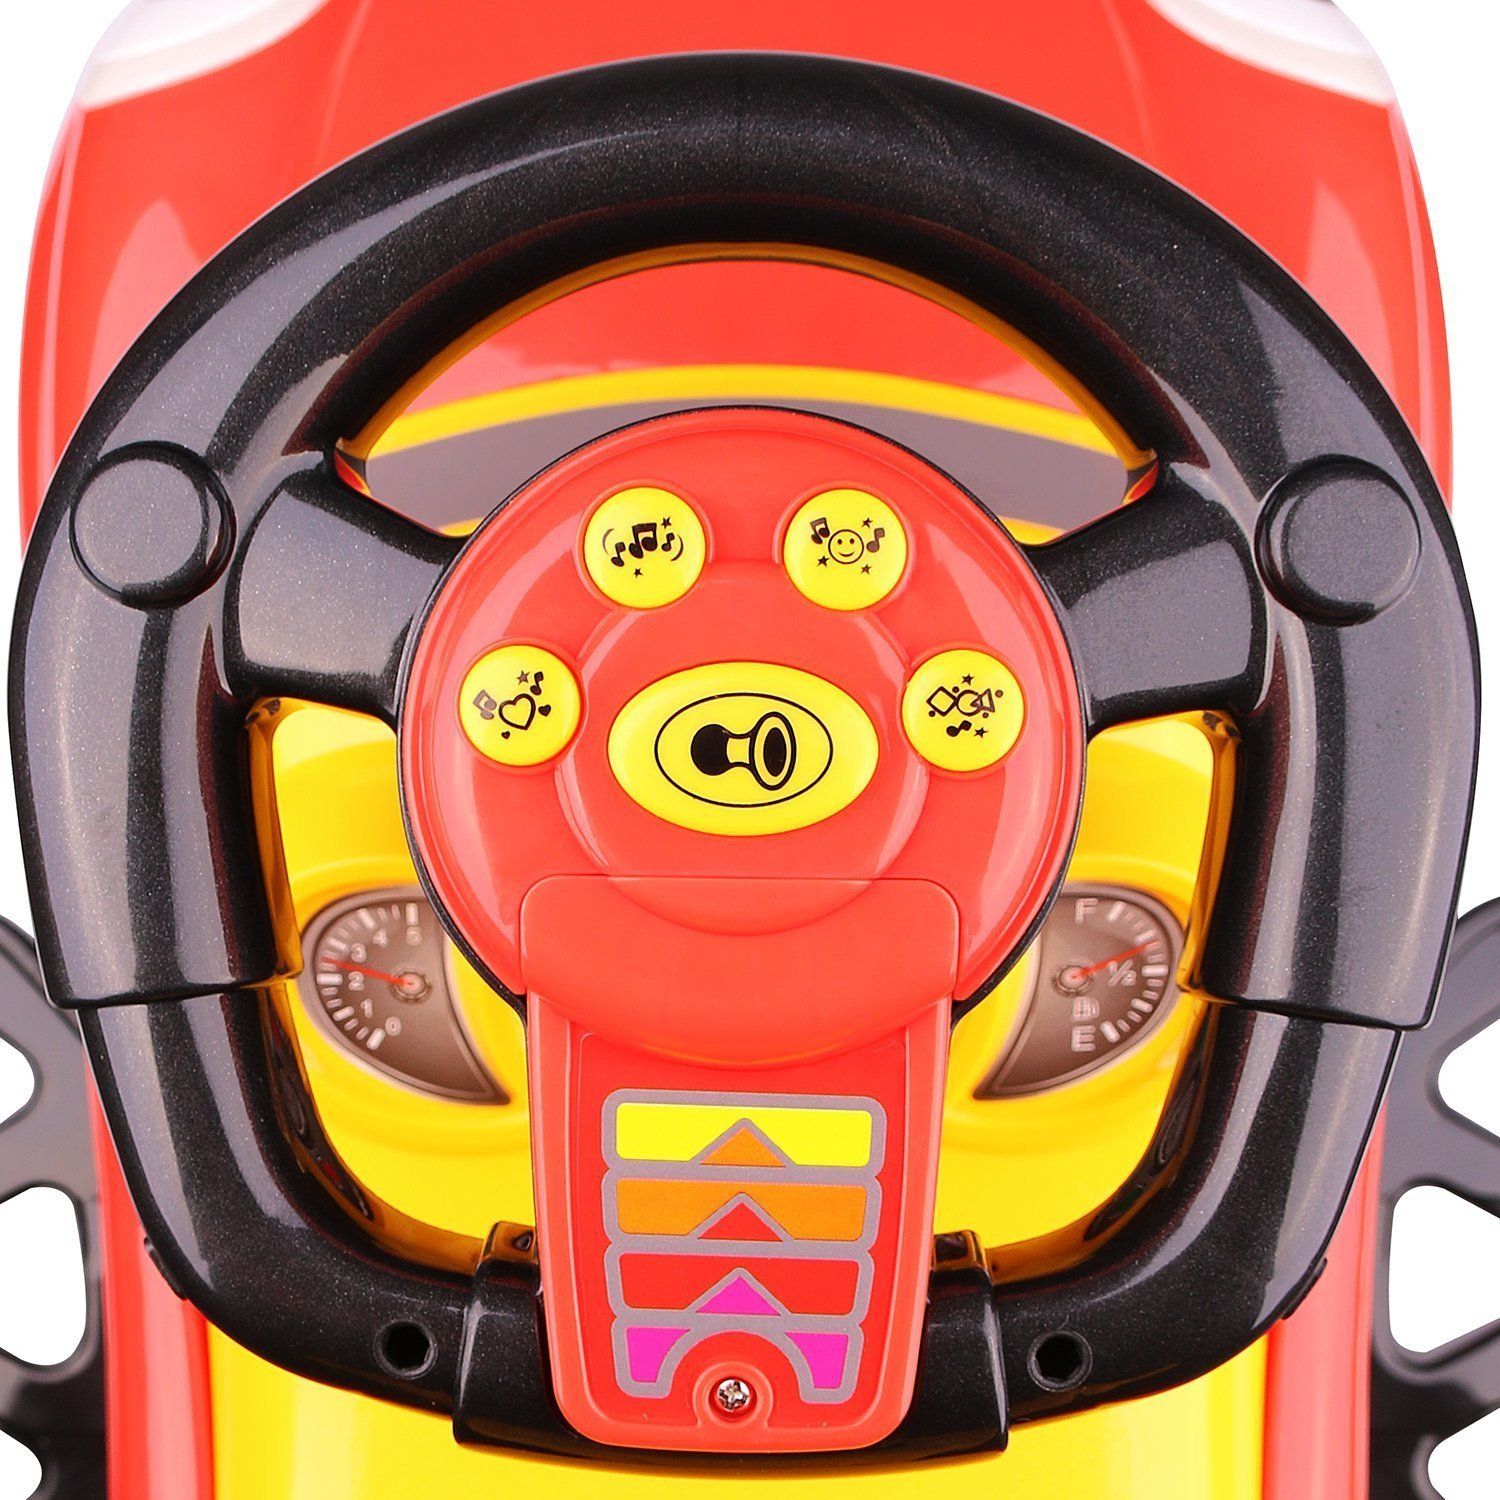 Little Tikes Push Car 3 in 1 | Freddo Toys